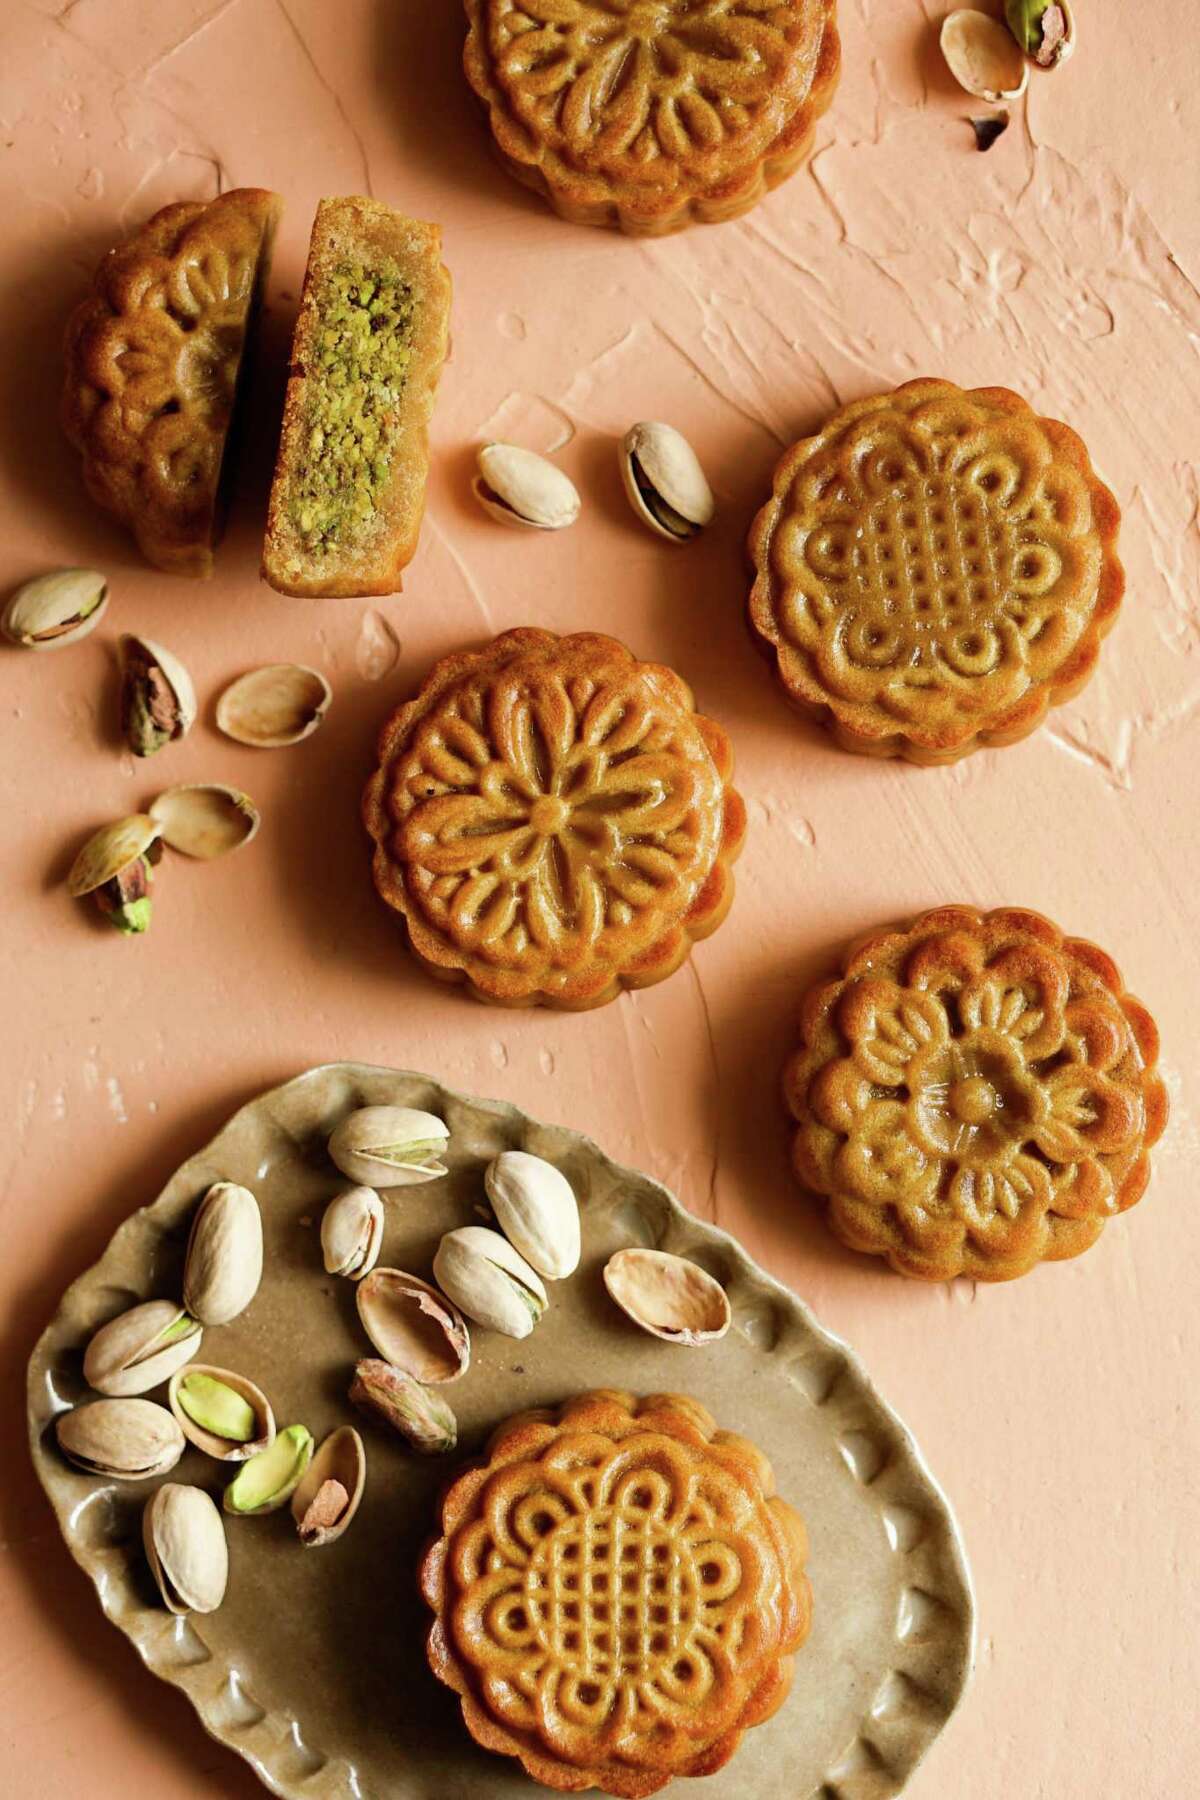 Honey Pistachio Mooncakes from Kristina Cho's cookbook, "Mooncakes and Milk Bread" (Harper Horizon).